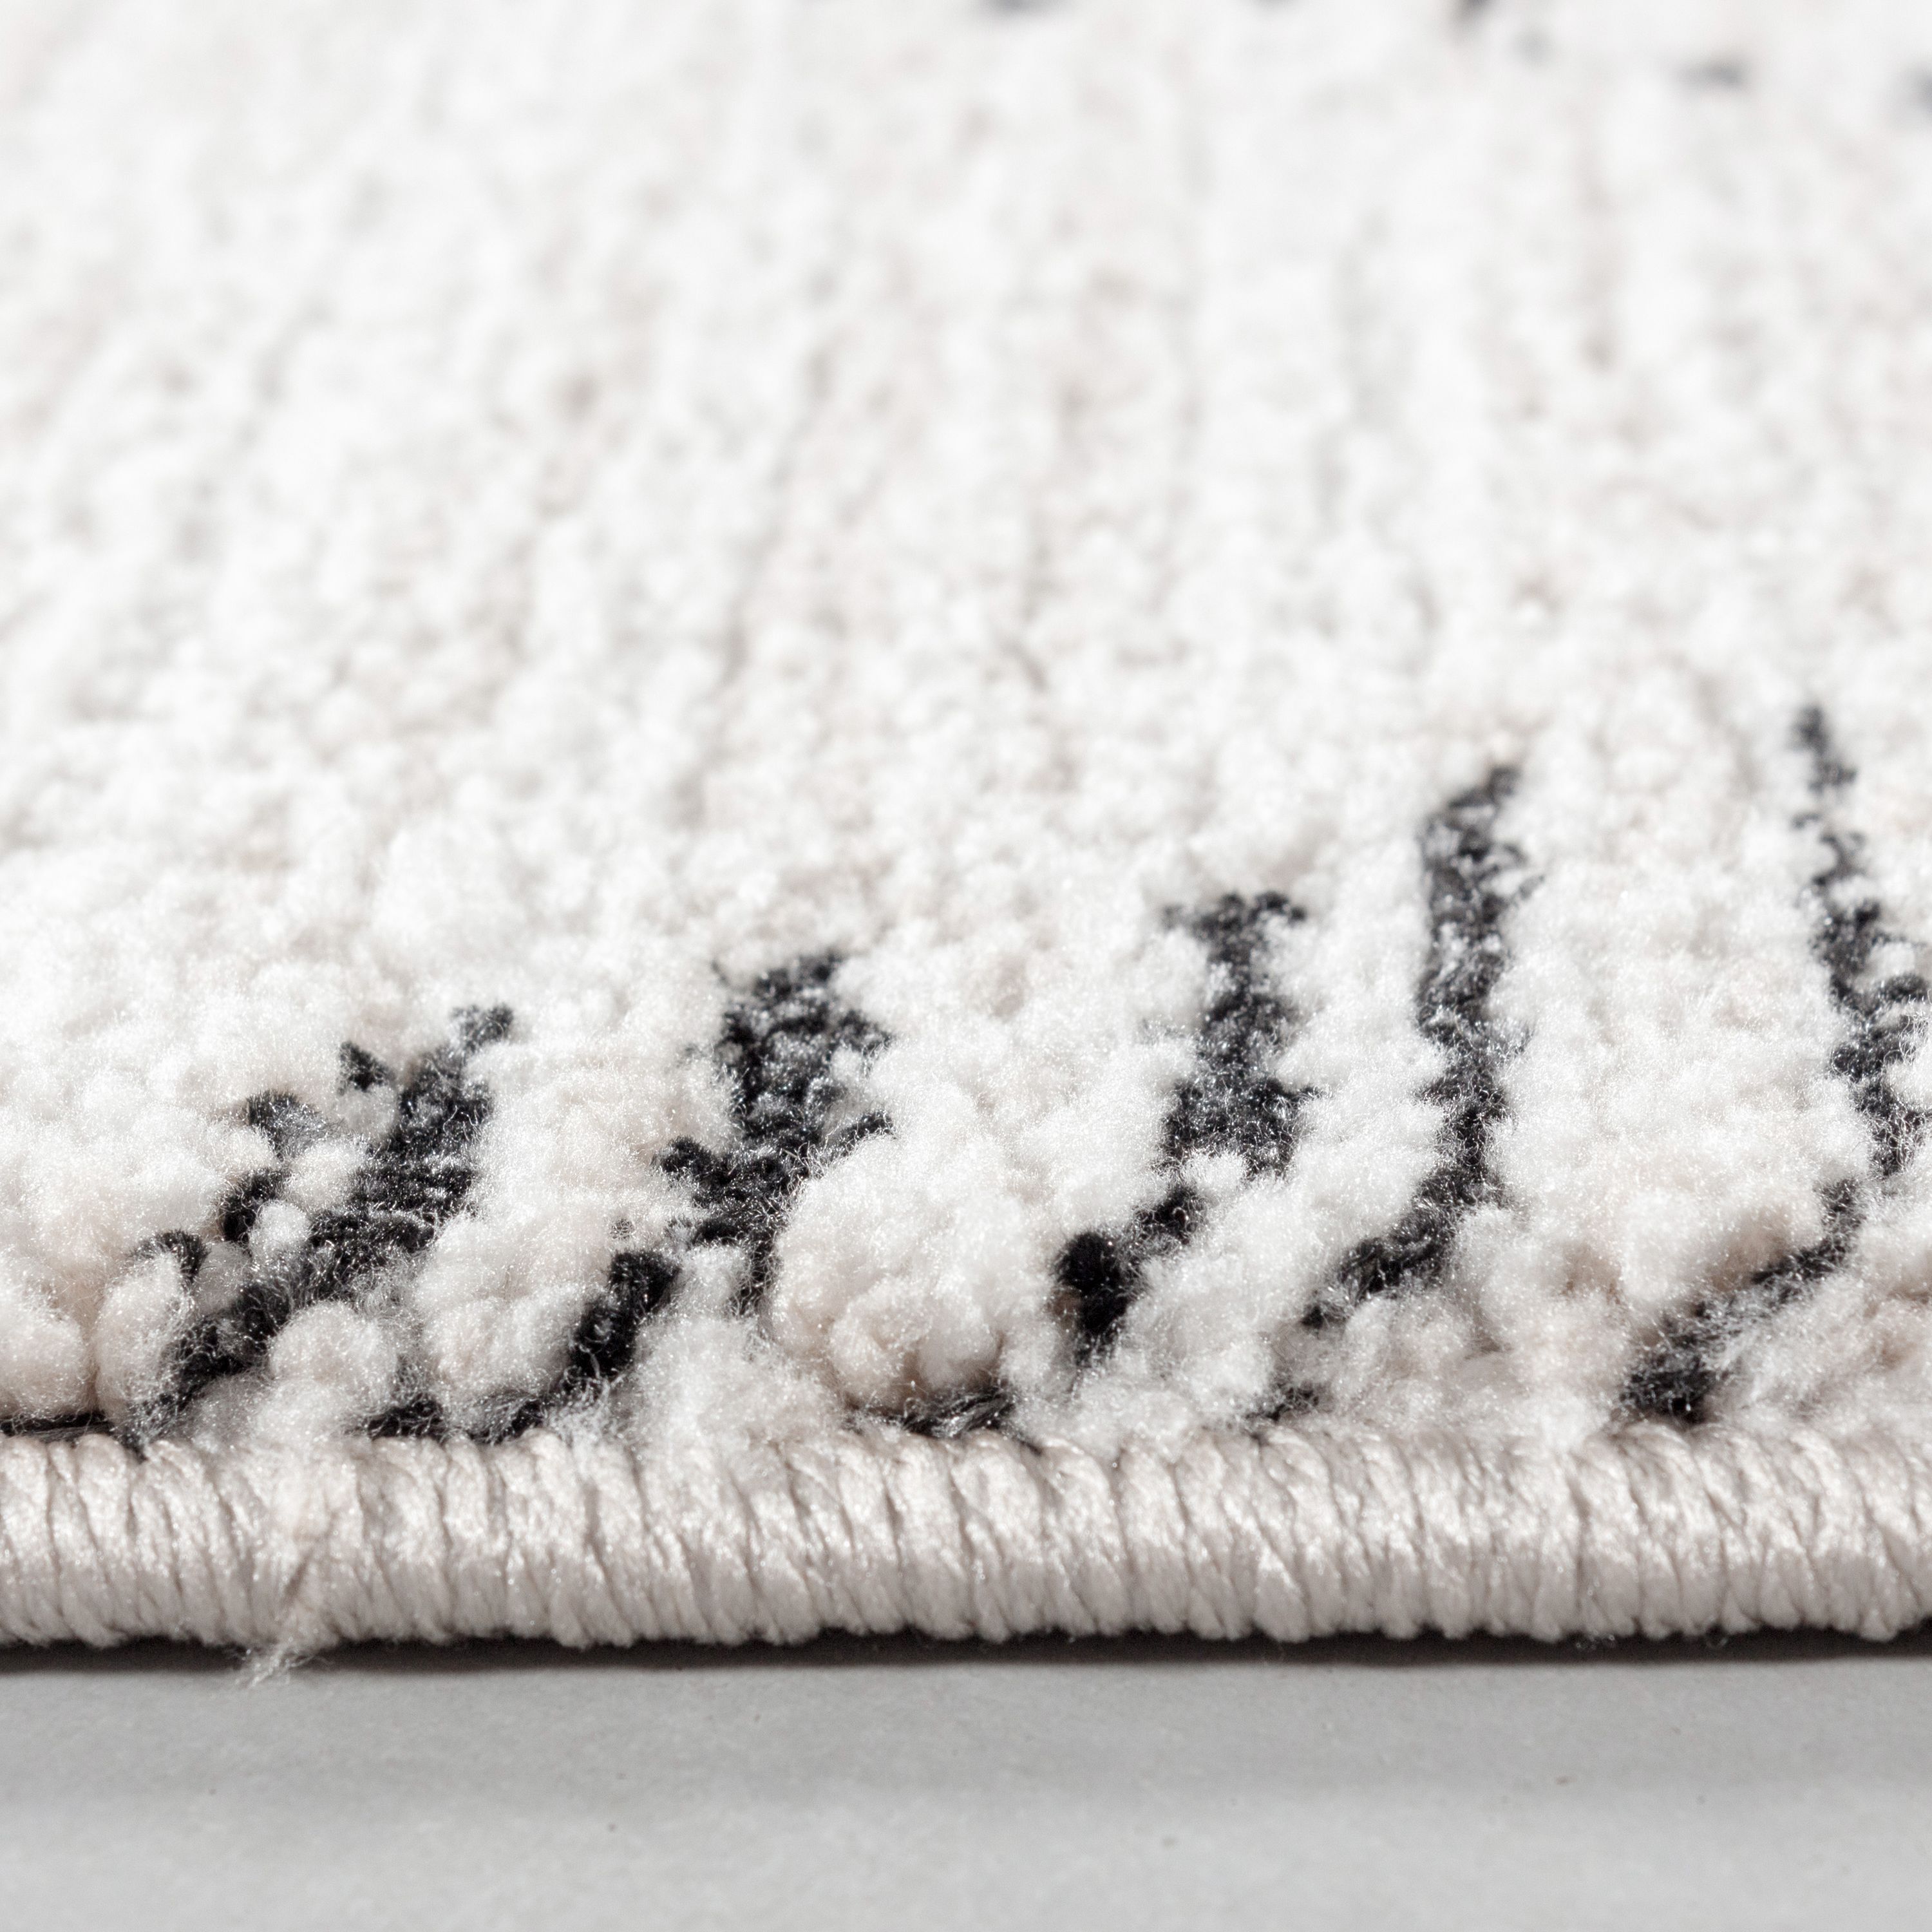 Tapis à poils courts salon tapis design scandinave style bohème aspect naturel